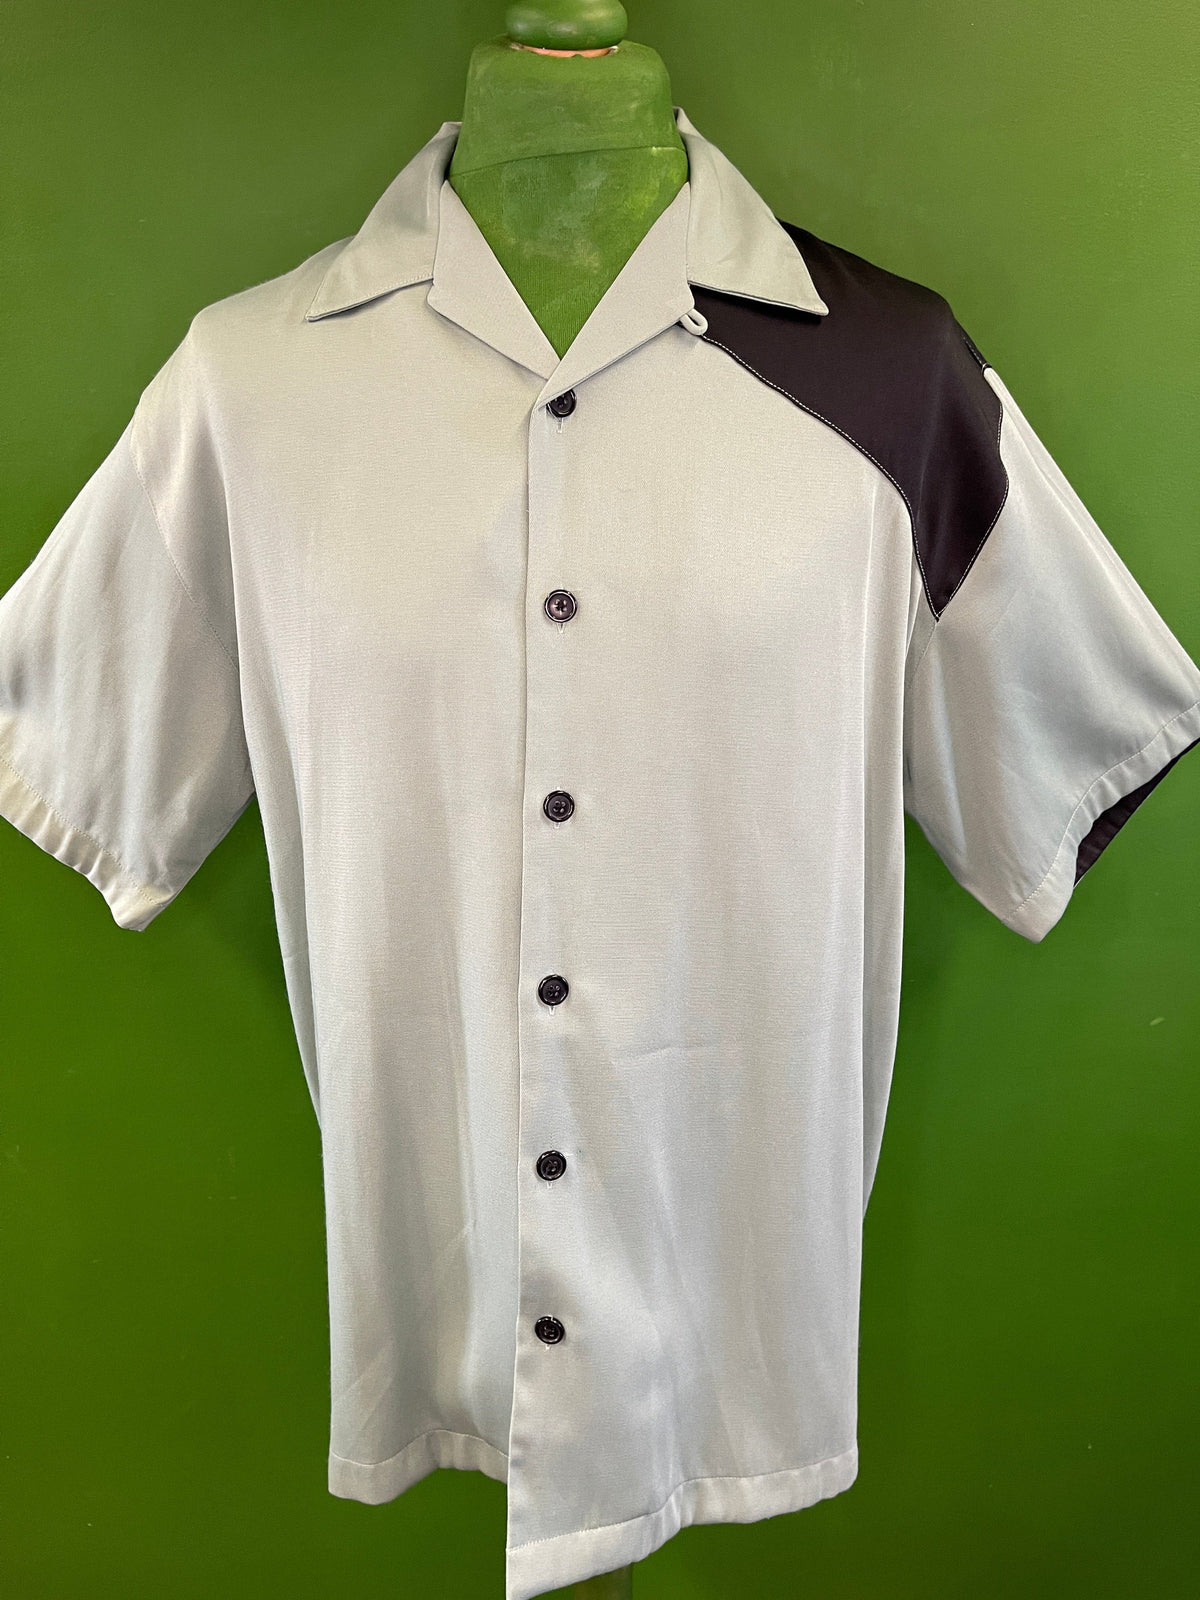 Route 66 Diner Mint Green Bowling Shirt Men's Medium